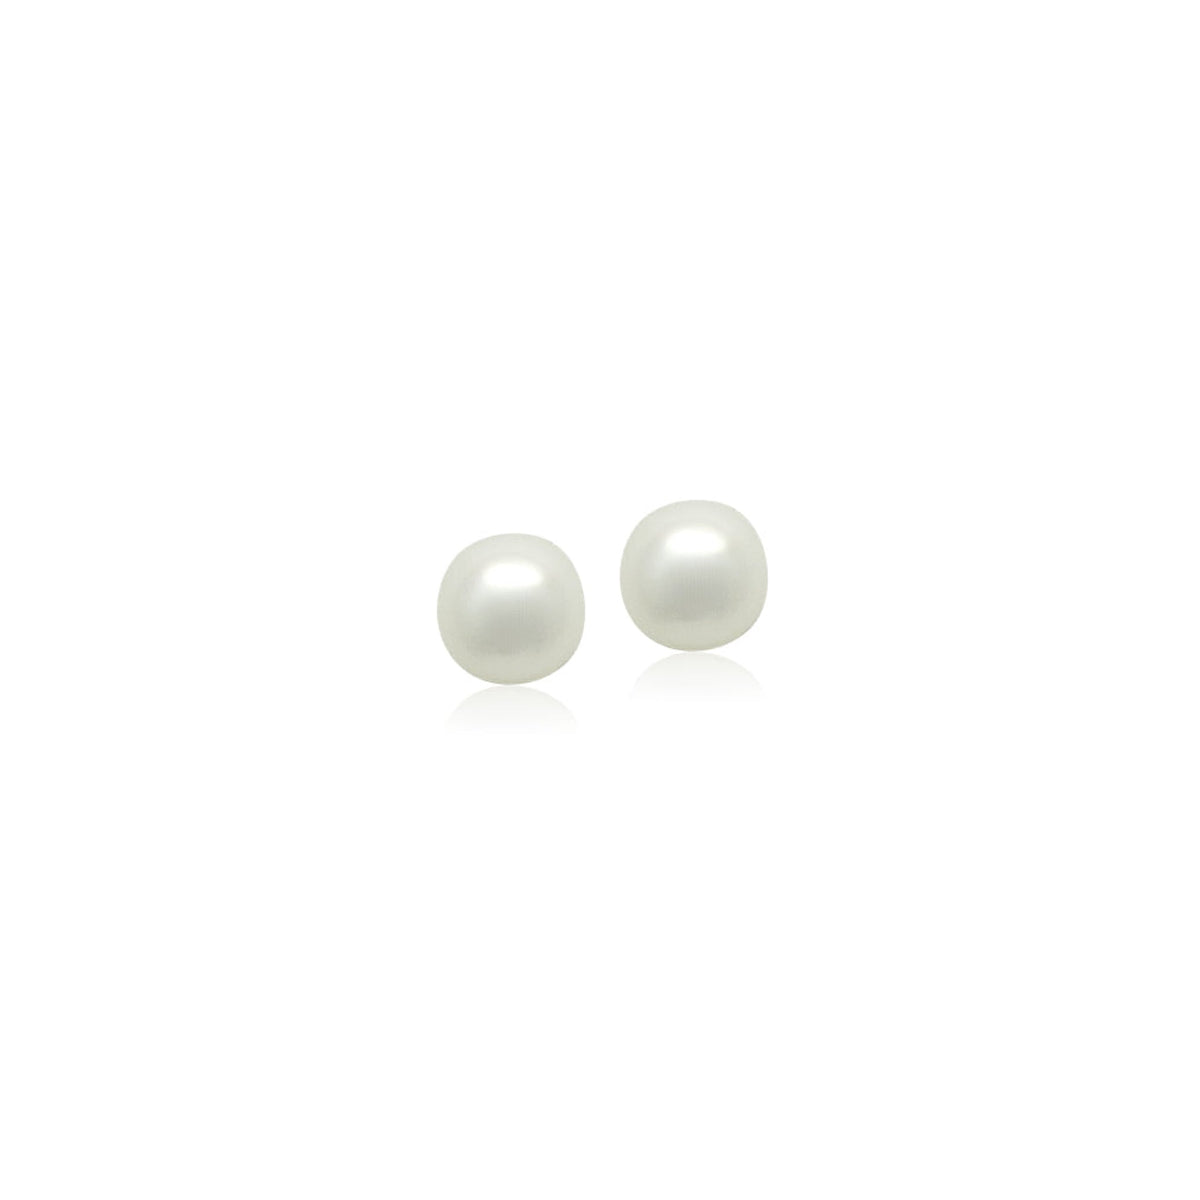 5-6mm Round Freshwater Pearl Earrings.